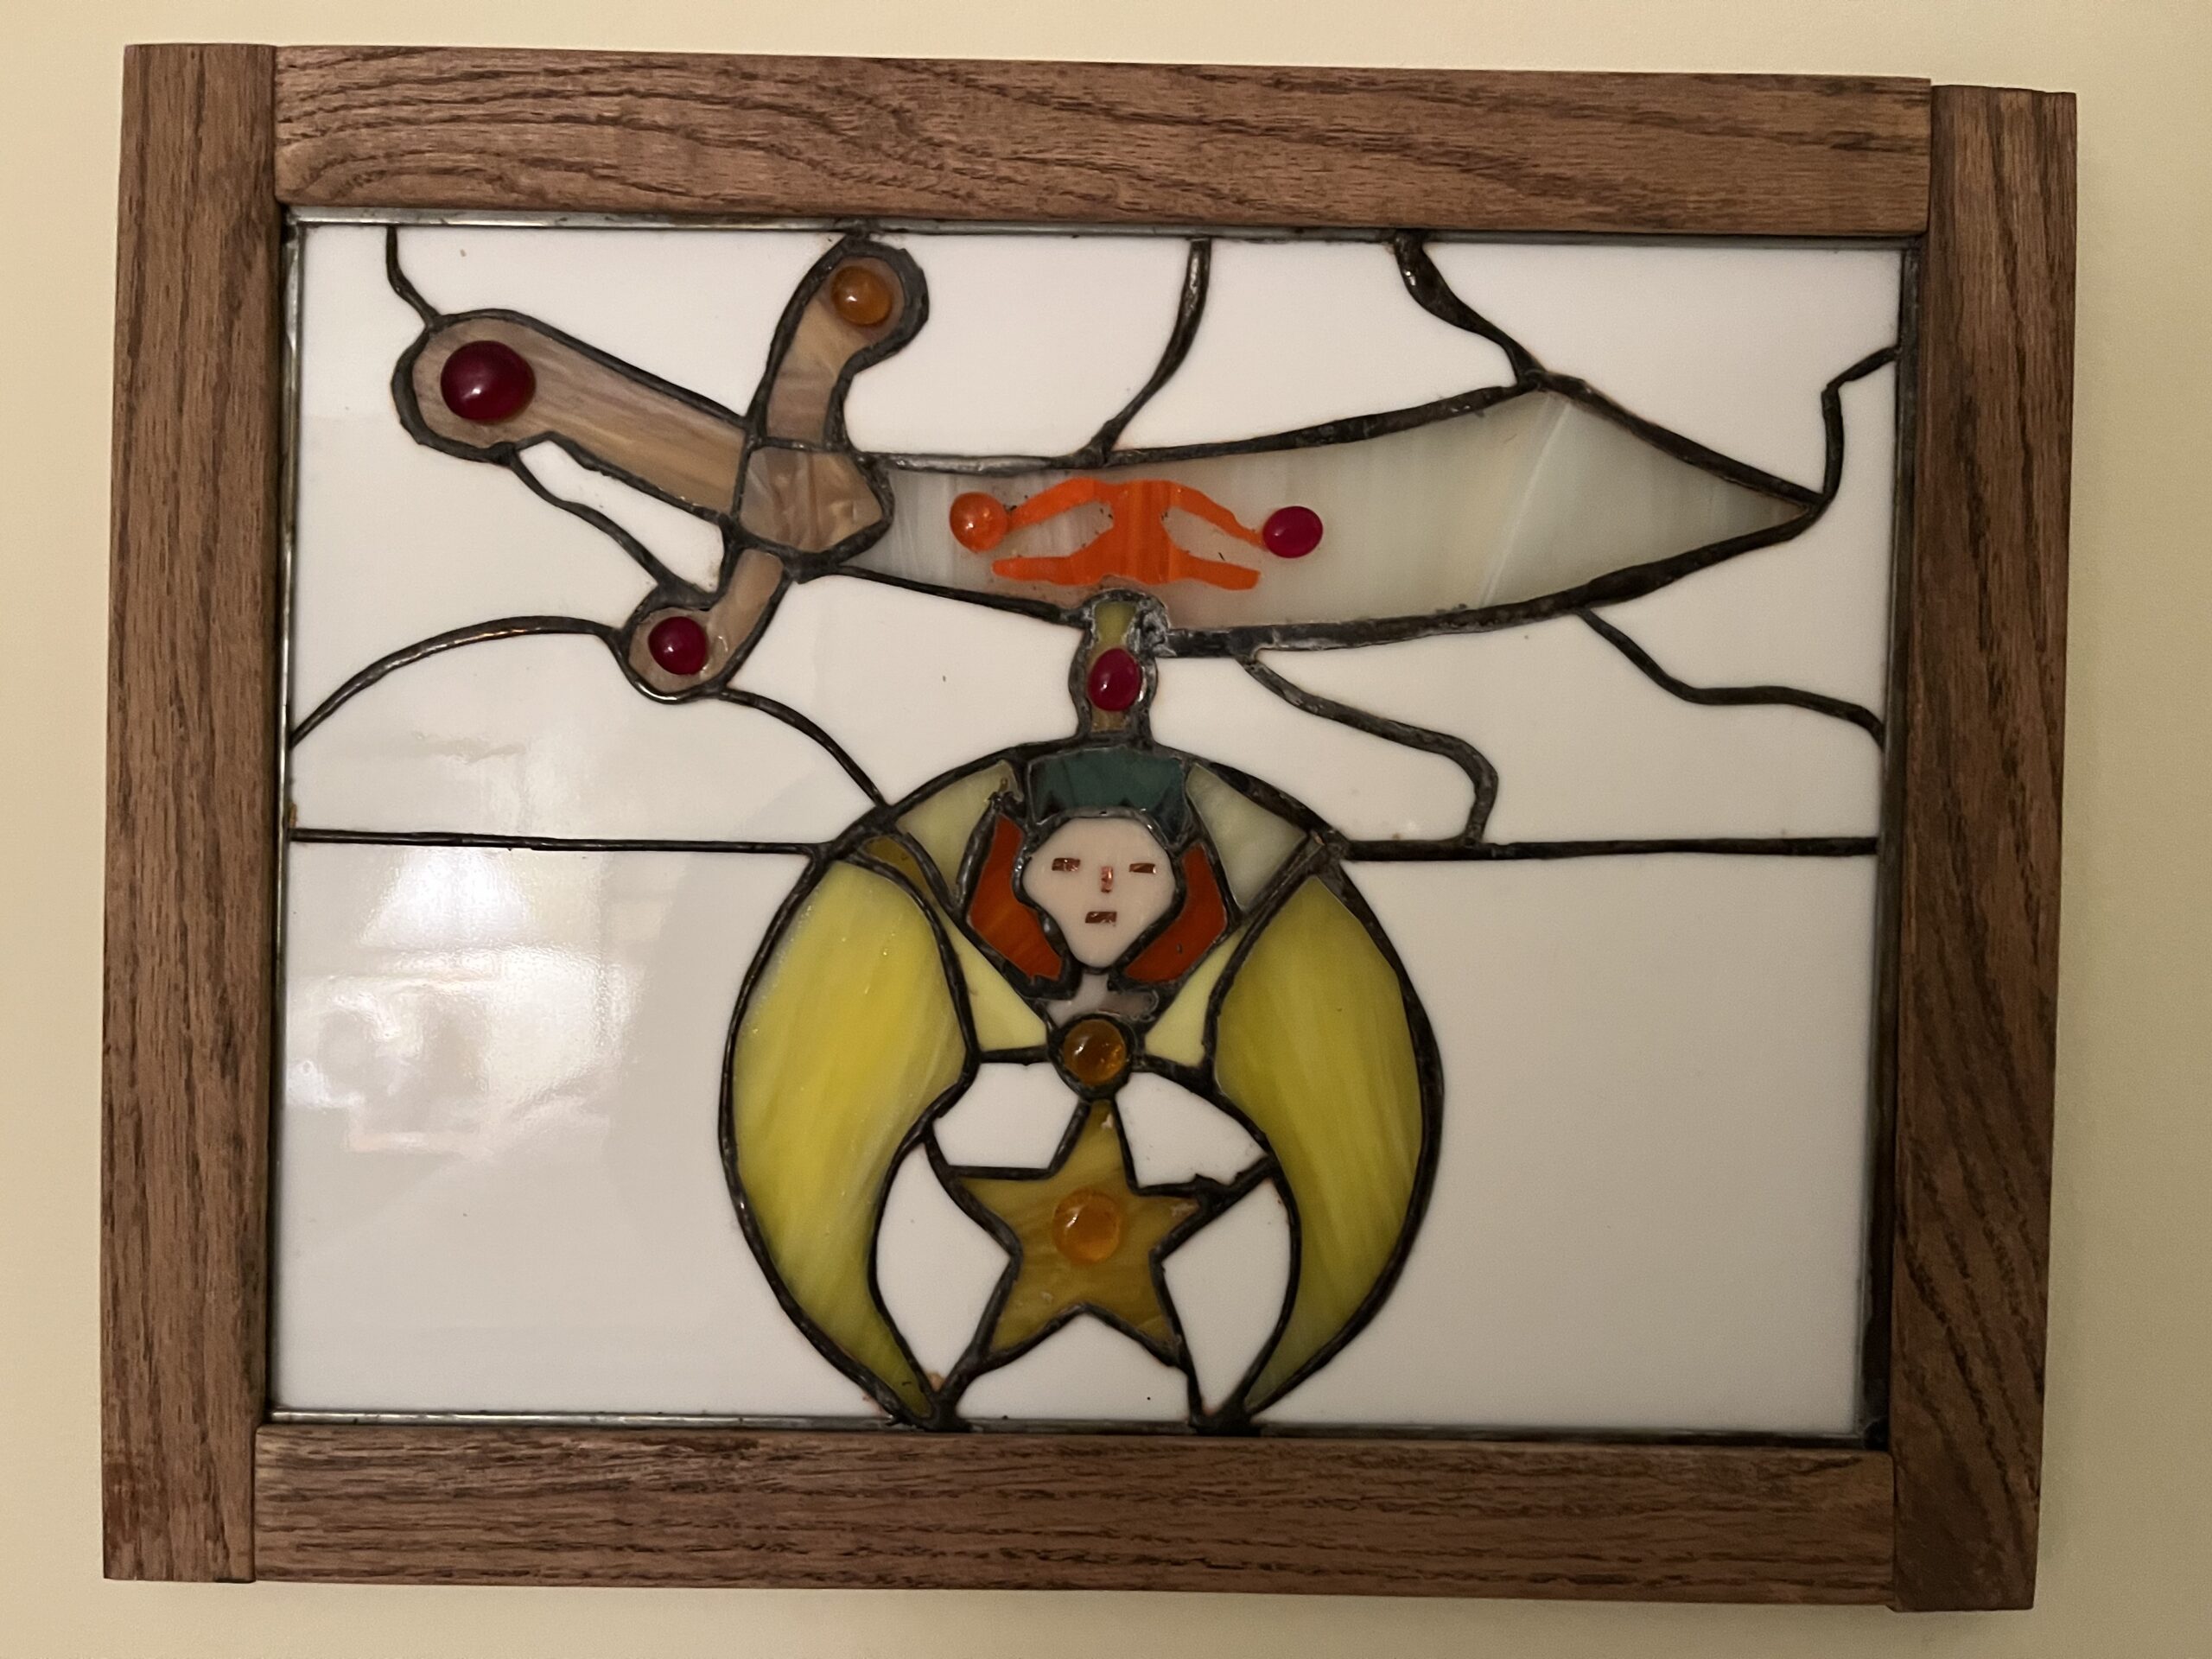 Item SH 2 - Framed Stained Glass of Shriner Emblem